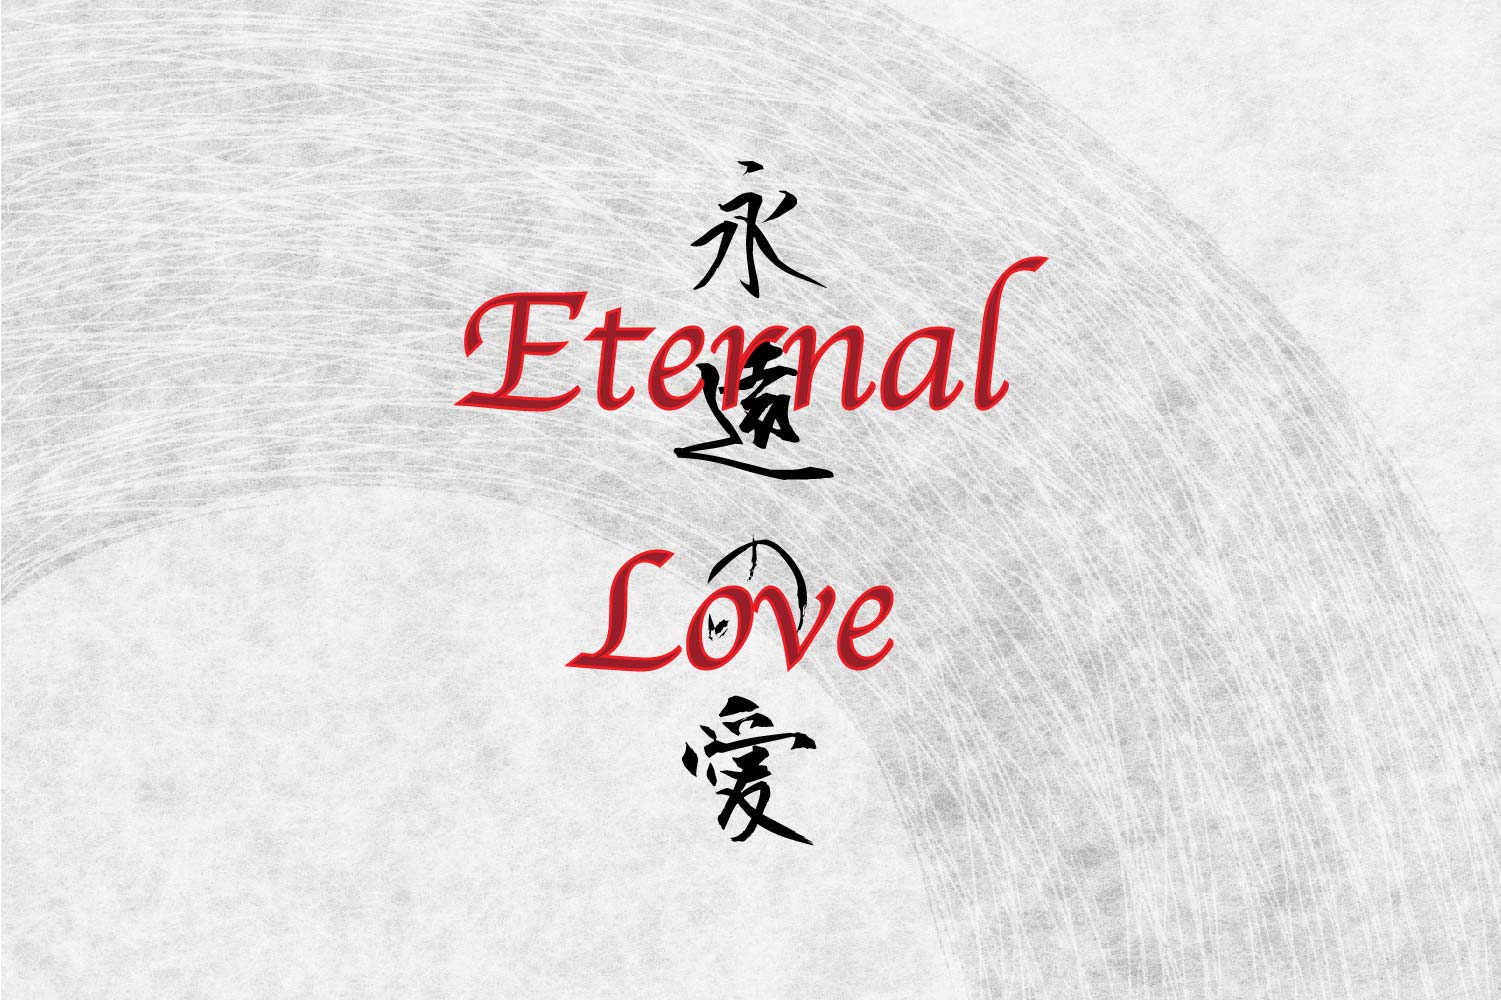 Japanese Letter Tattoo Idea - Eternal Love